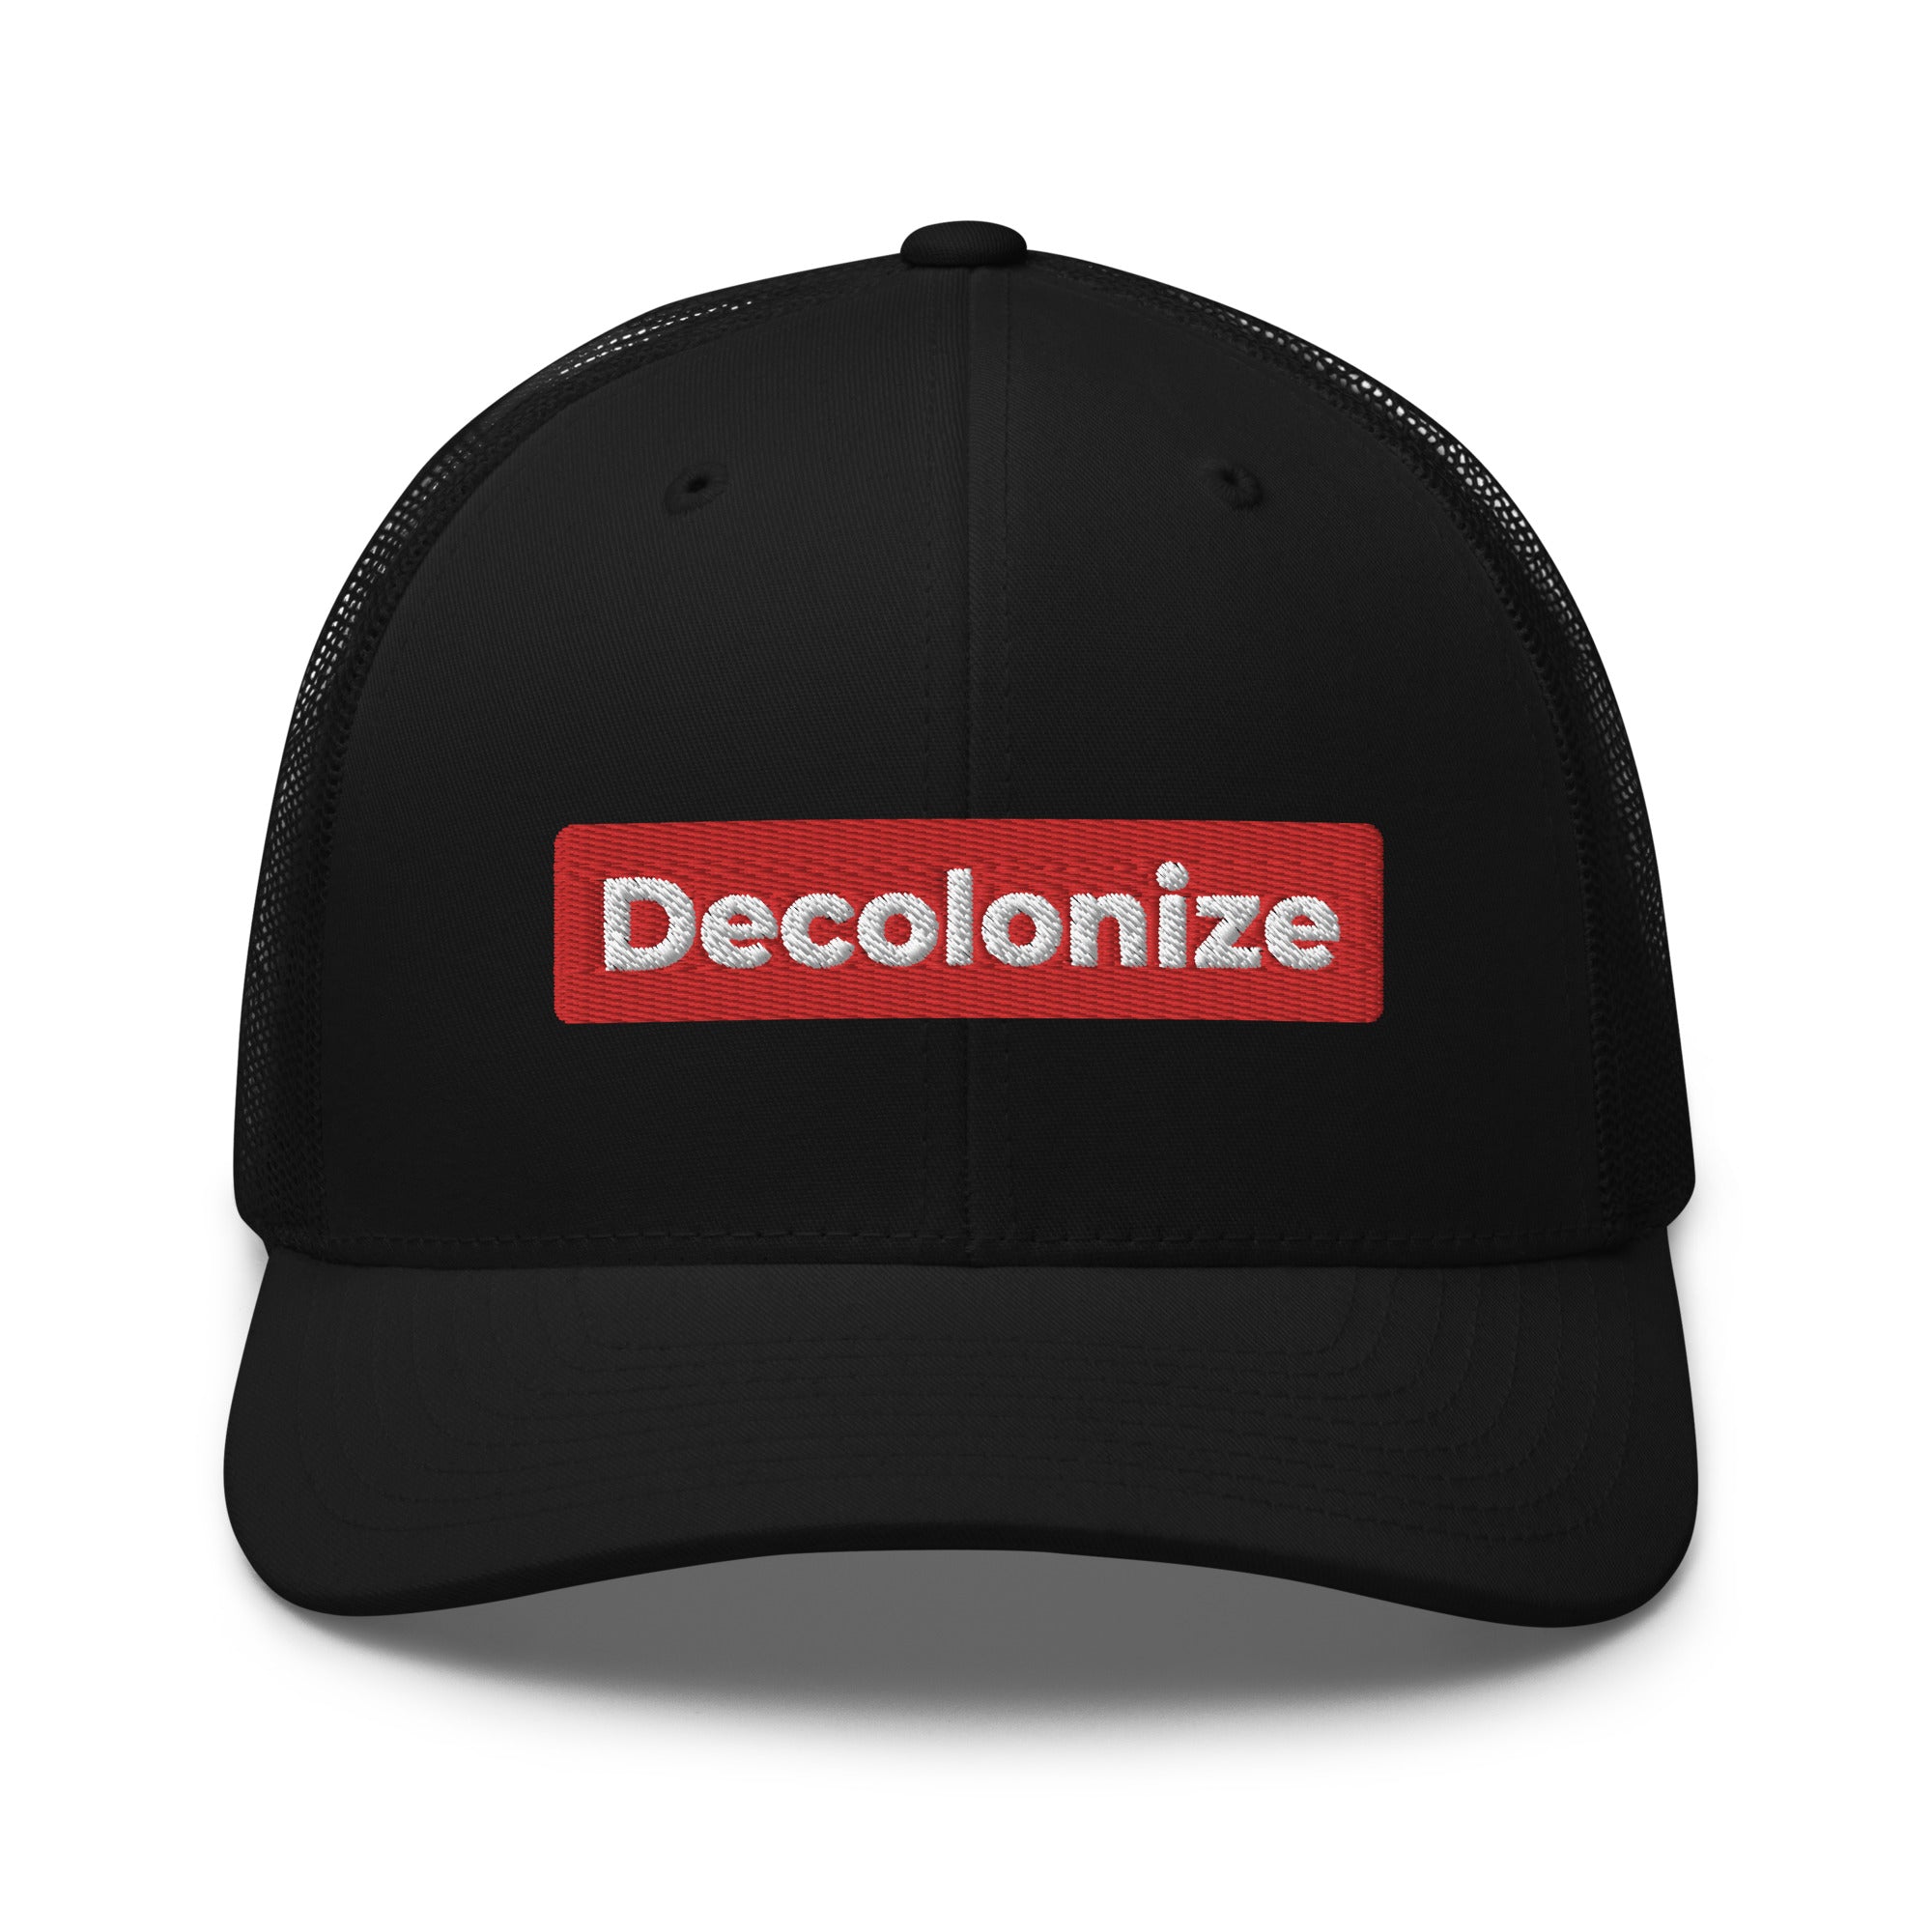 Red Label Decolonize Mesh Cap